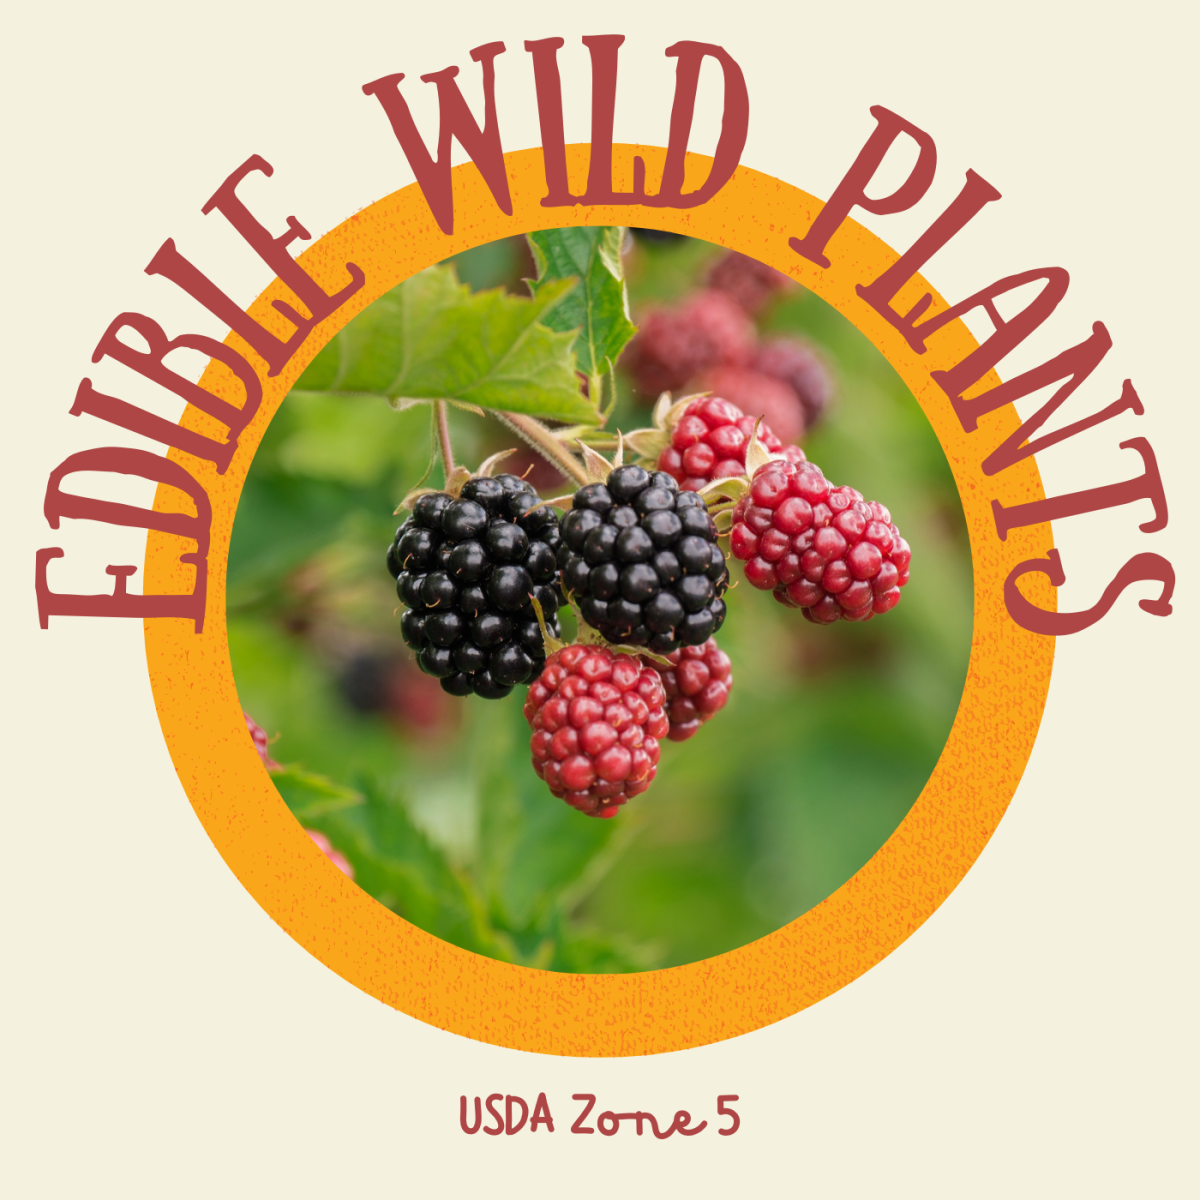 Learn how to forage edible wild perennials through the seasons.